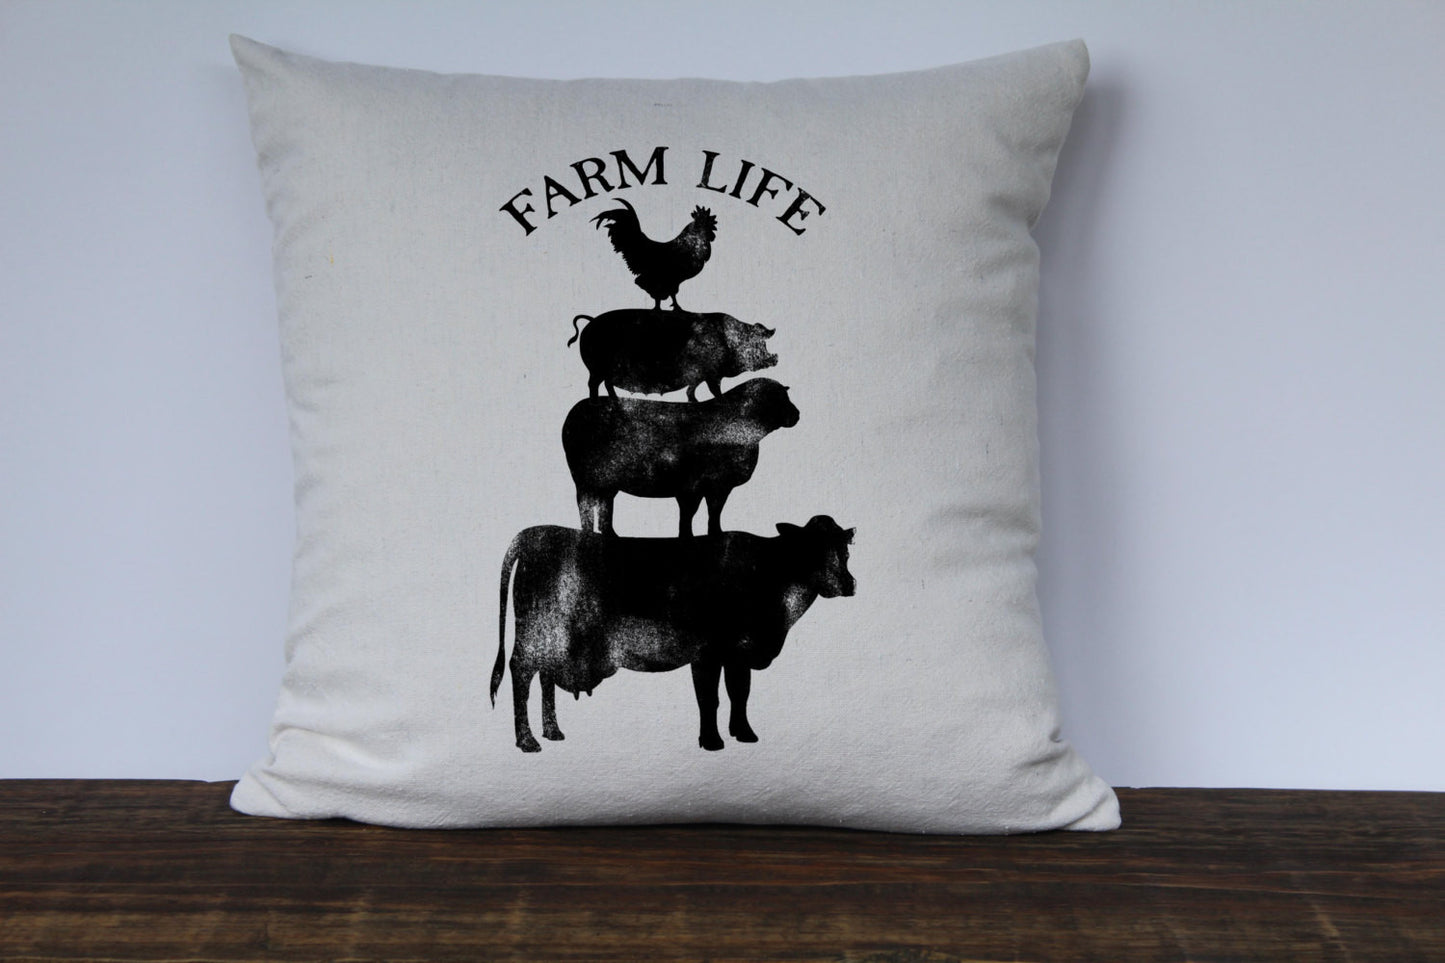 Farm Life Pillow Cover - Returning Grace Designs